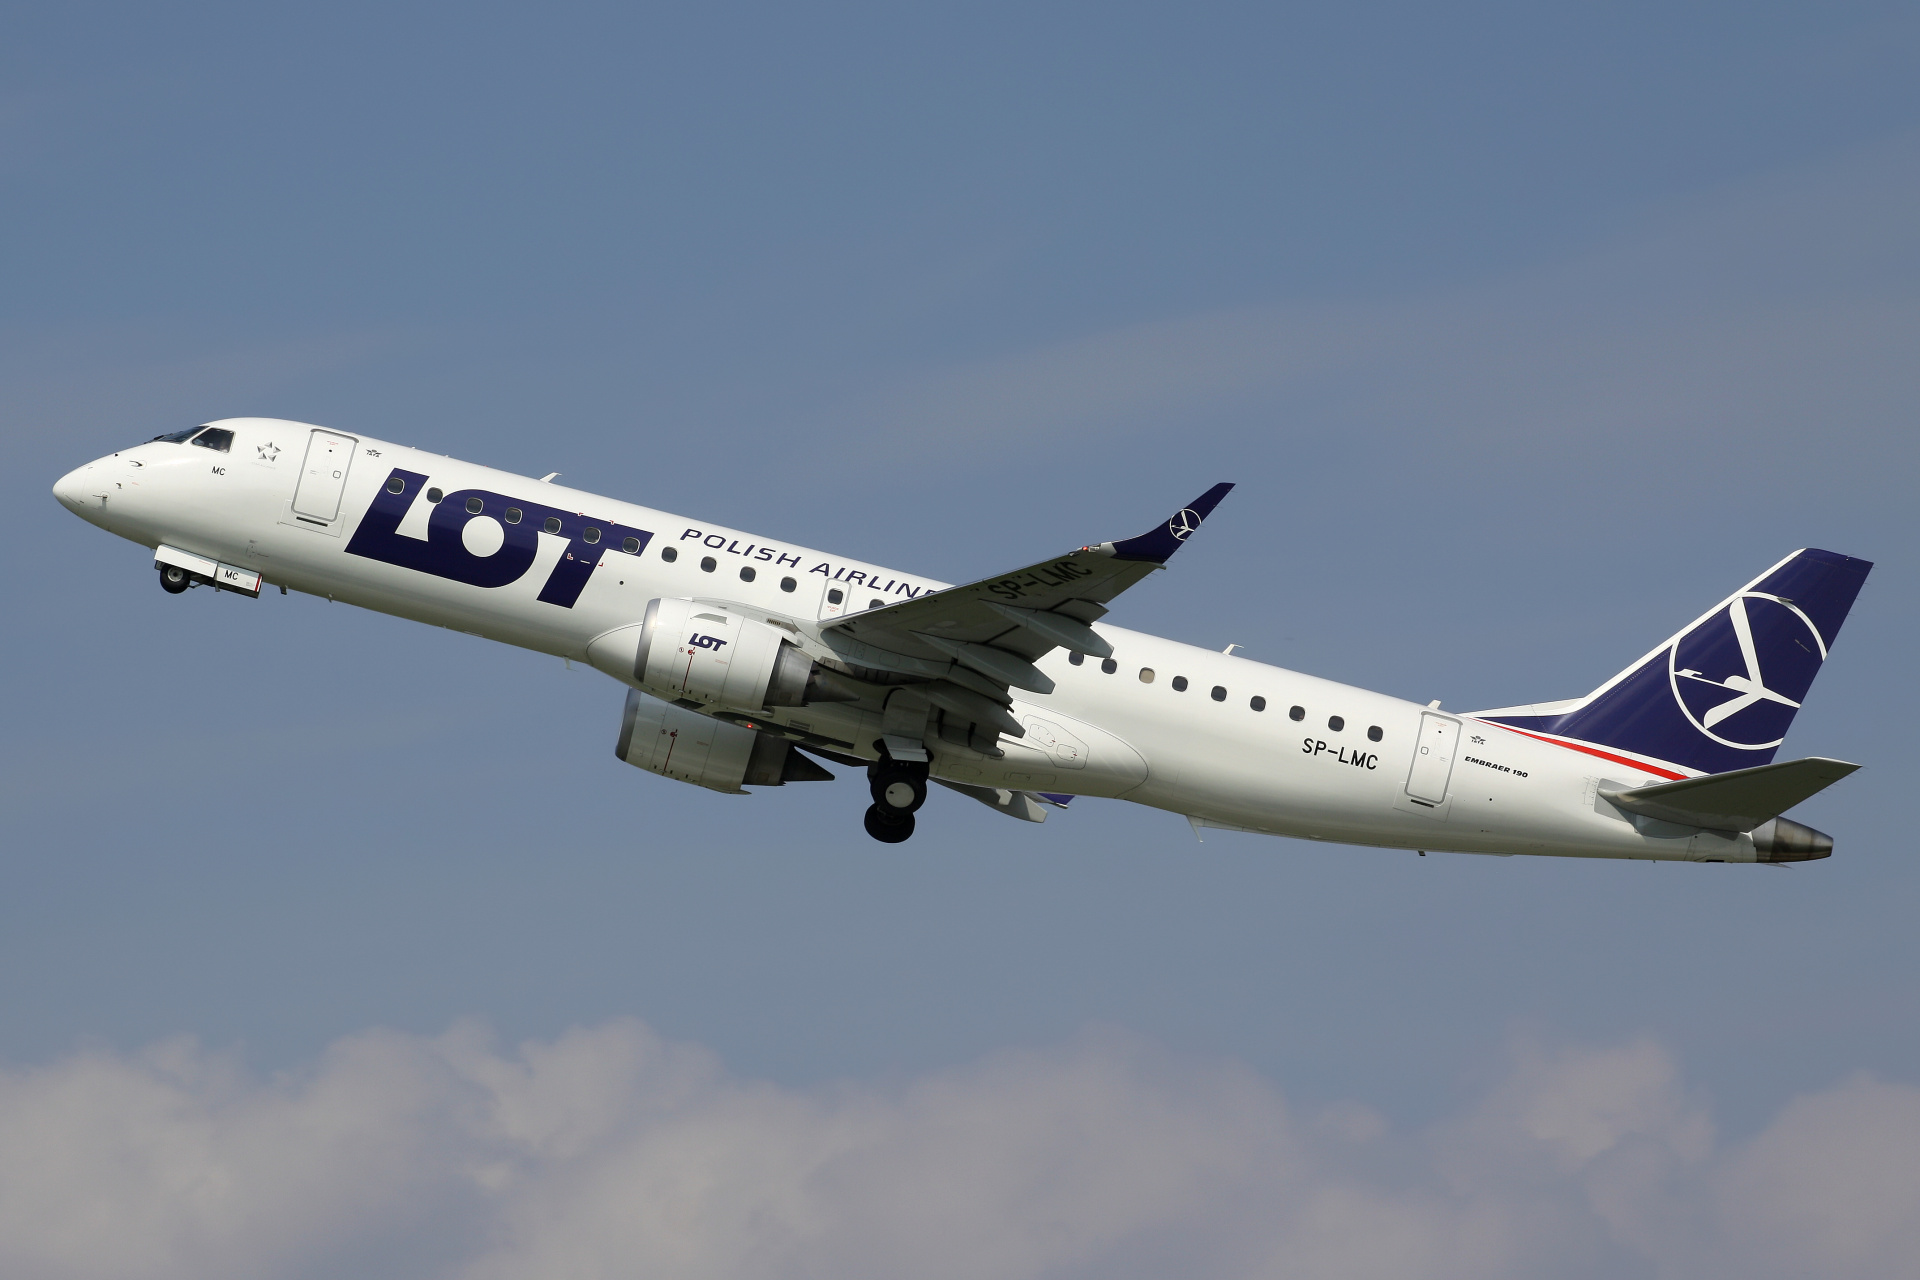 SP-LMC (Aircraft » EPWA Spotting » Embraer E190 » LOT Polish Airlines)